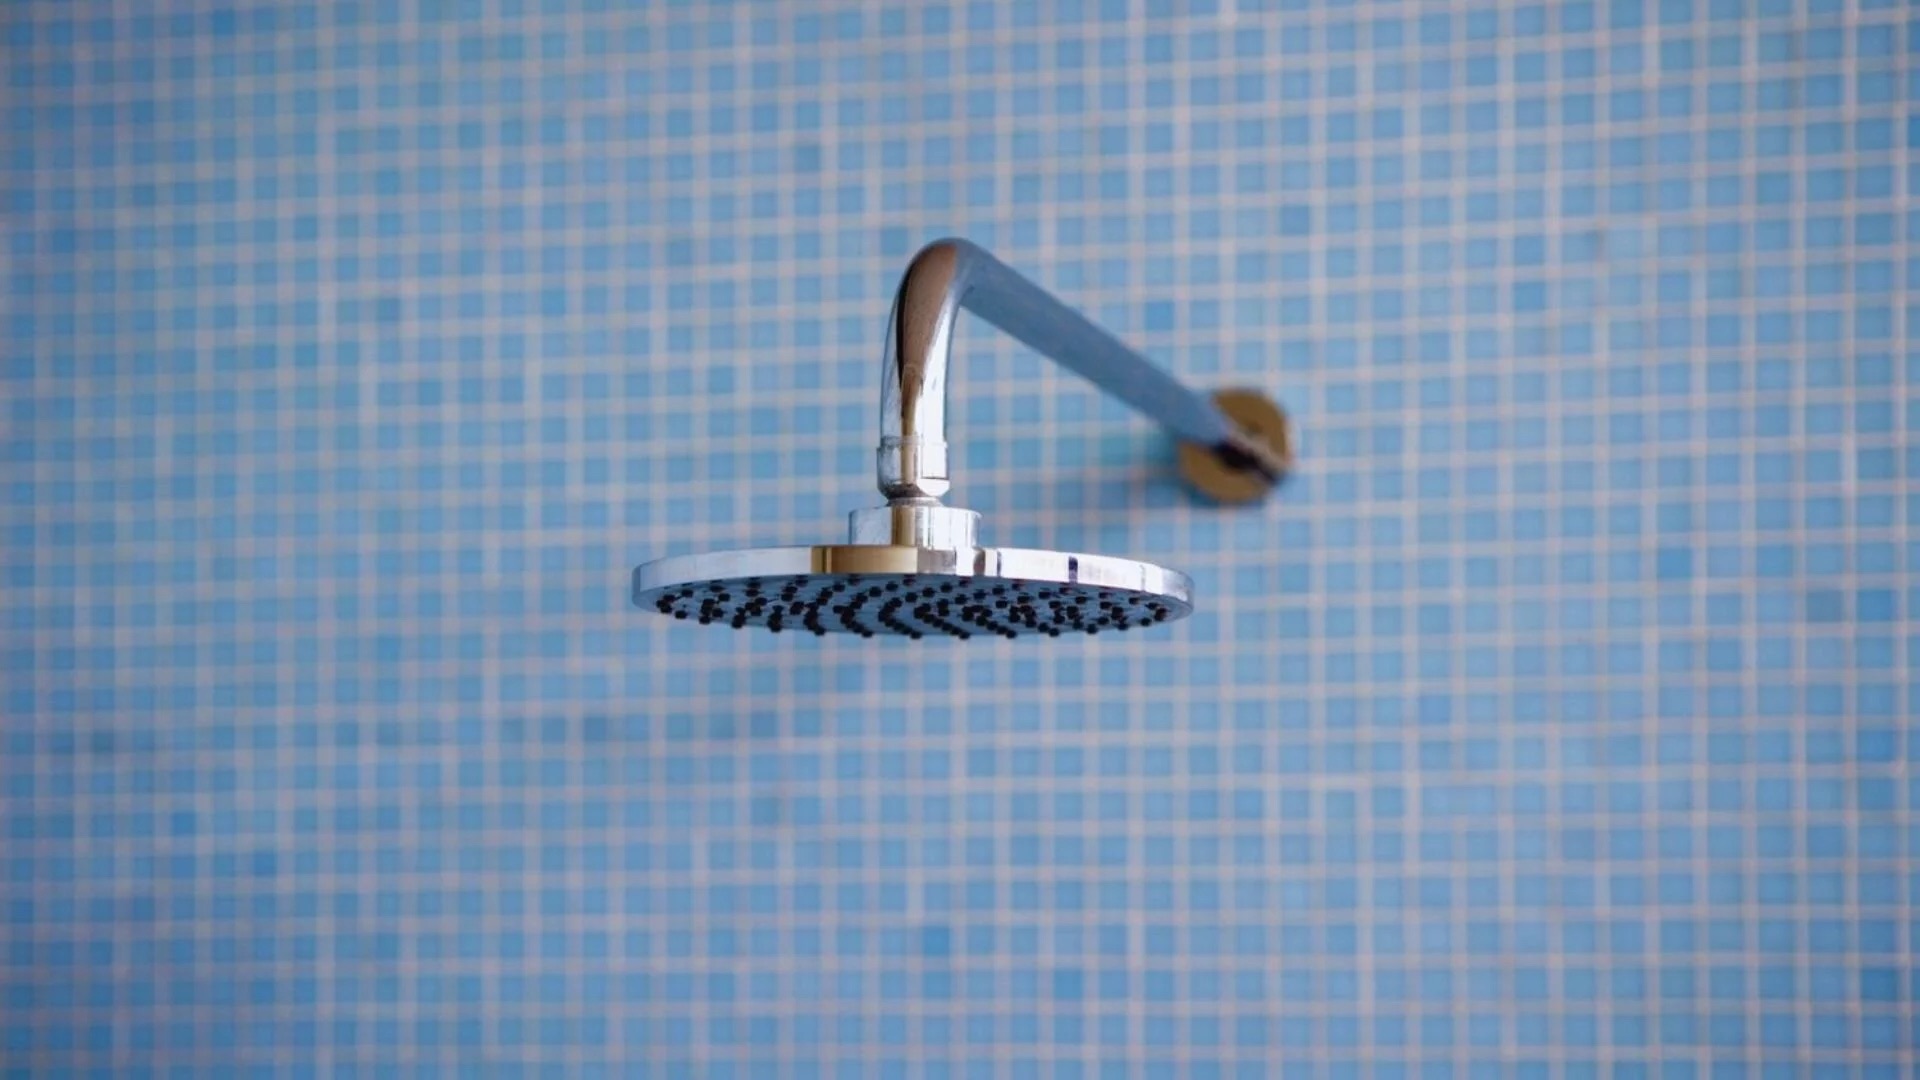 How To Fix Leaking Showerhead